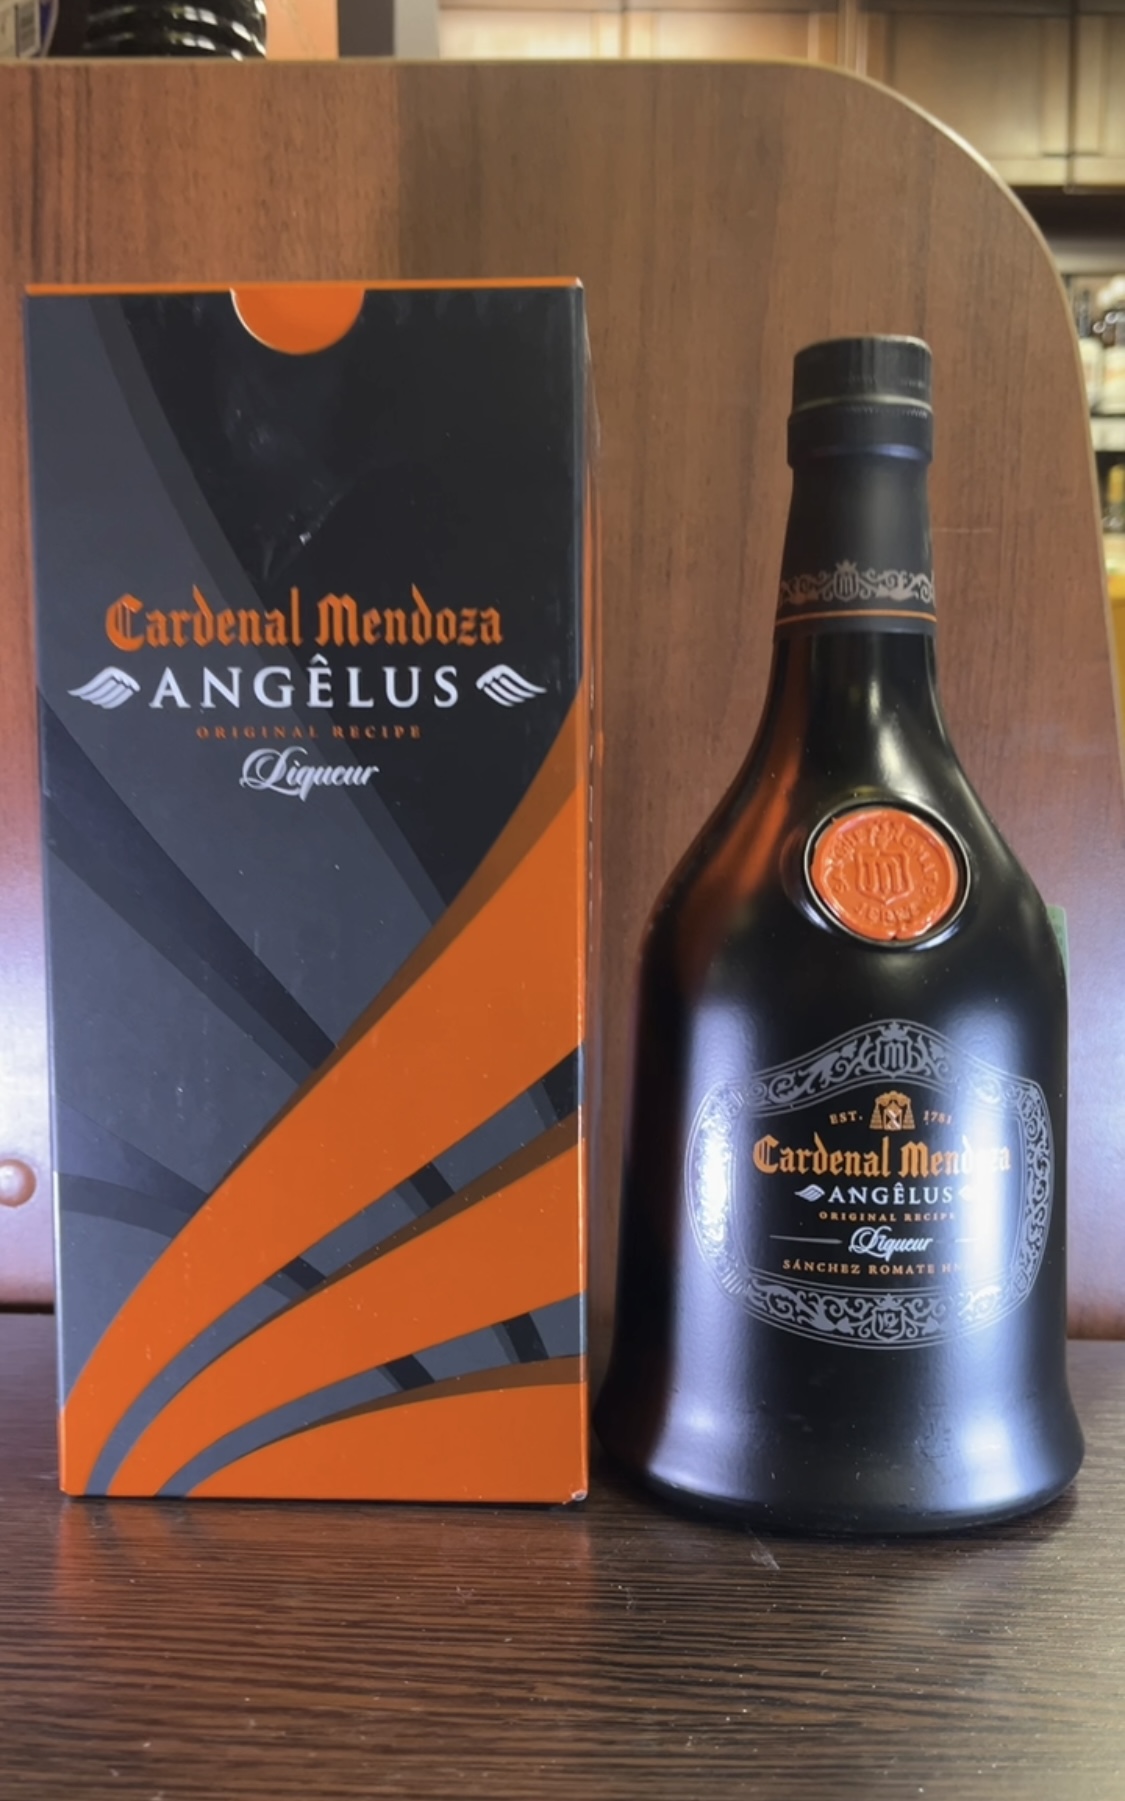 Liqueur Angelus Cardenal Mendoza Ликер Анхелус Кардинал Мендоза 0.7л в подарочной упаковке